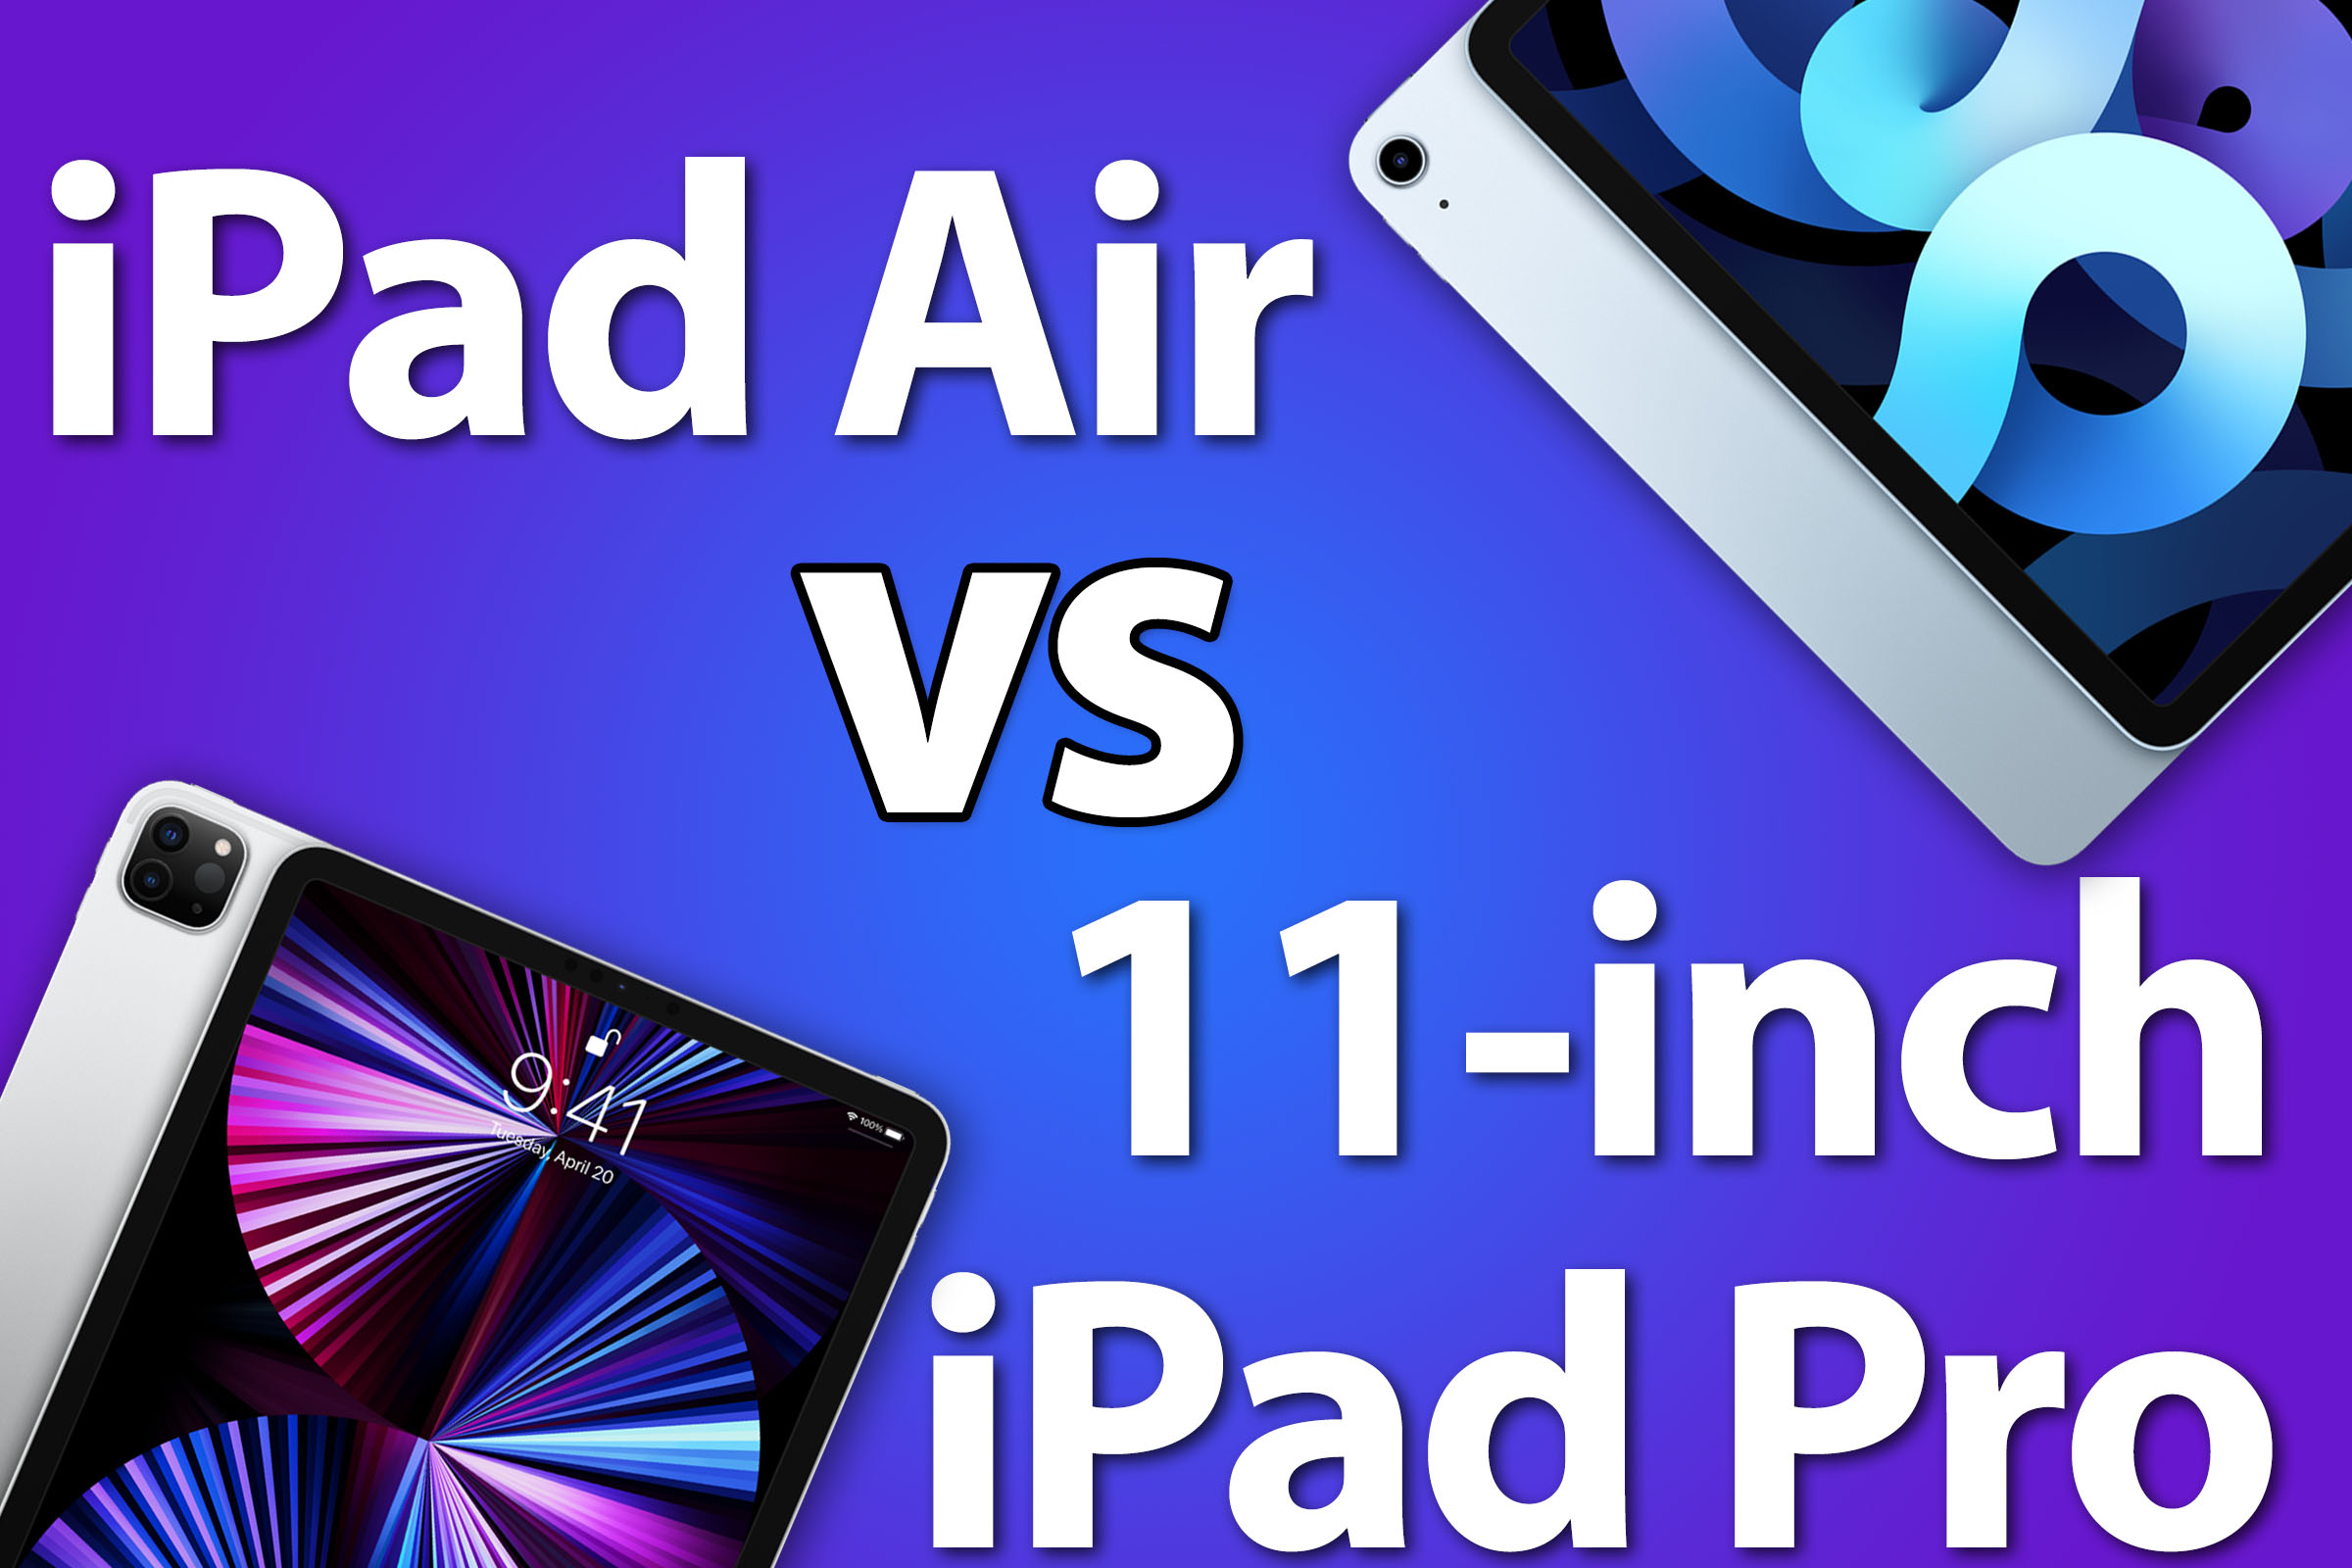 ipad pro 11 inch vs ipad air 5